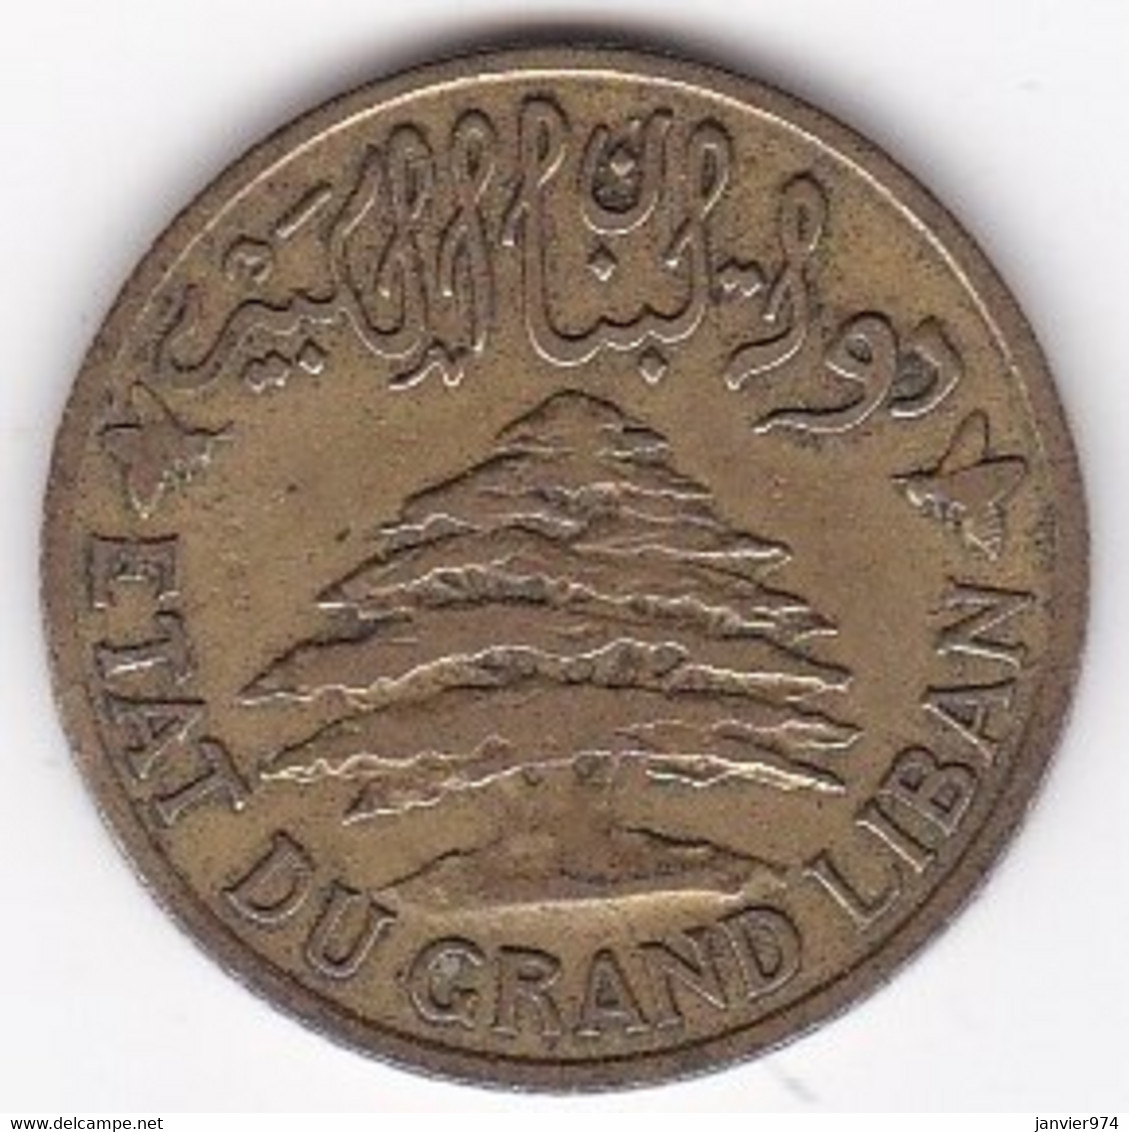 Etat Du Grand Liban 5 Piastres 1931 , En Bronze Aluminium, Lec# 28 - Lebanon